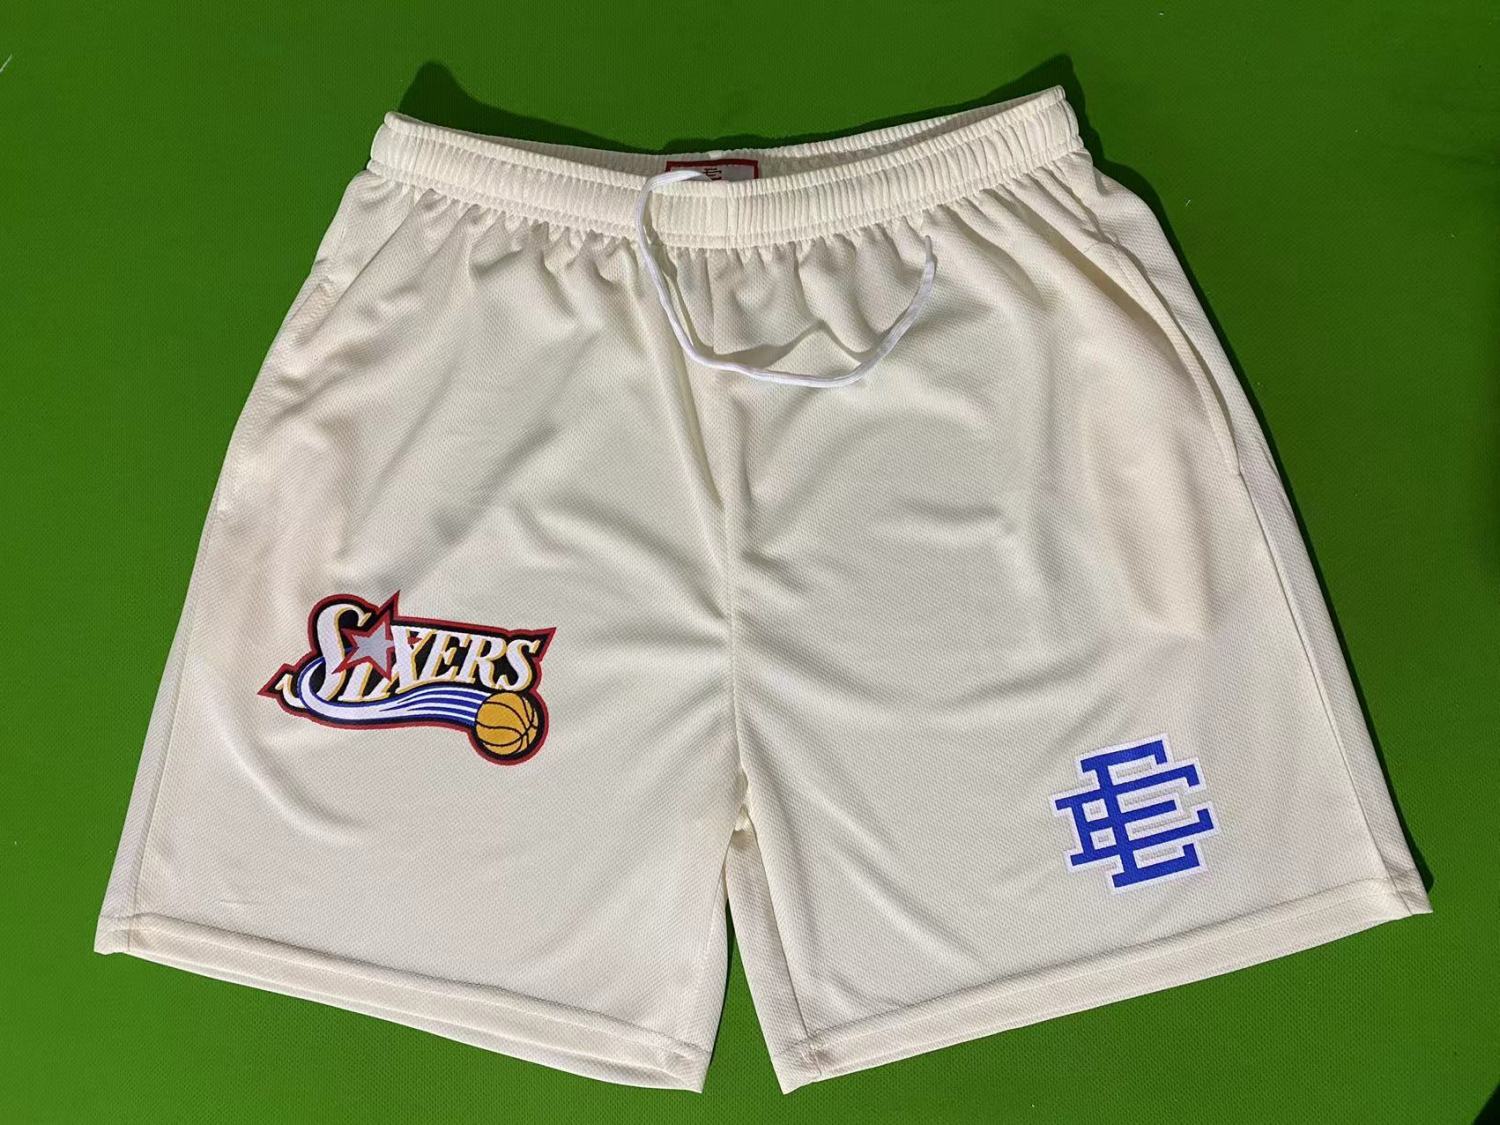 Eric Emanuel Sixers logo shorts 8 colors